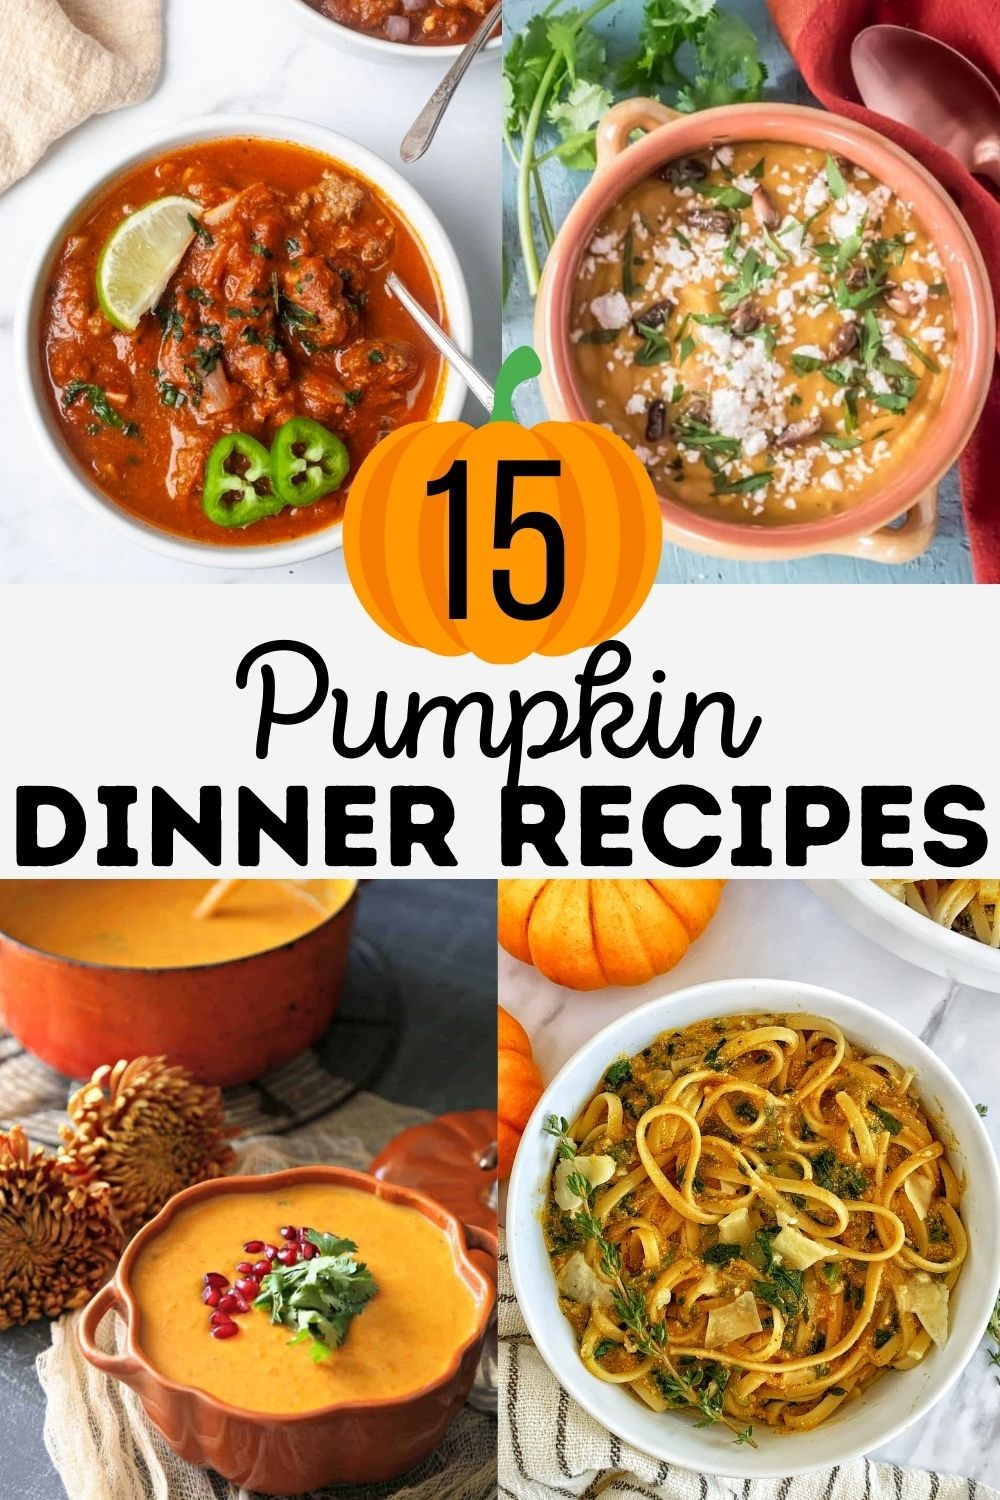 pumpkin dinner recipes including soups & pastas with pumpkin